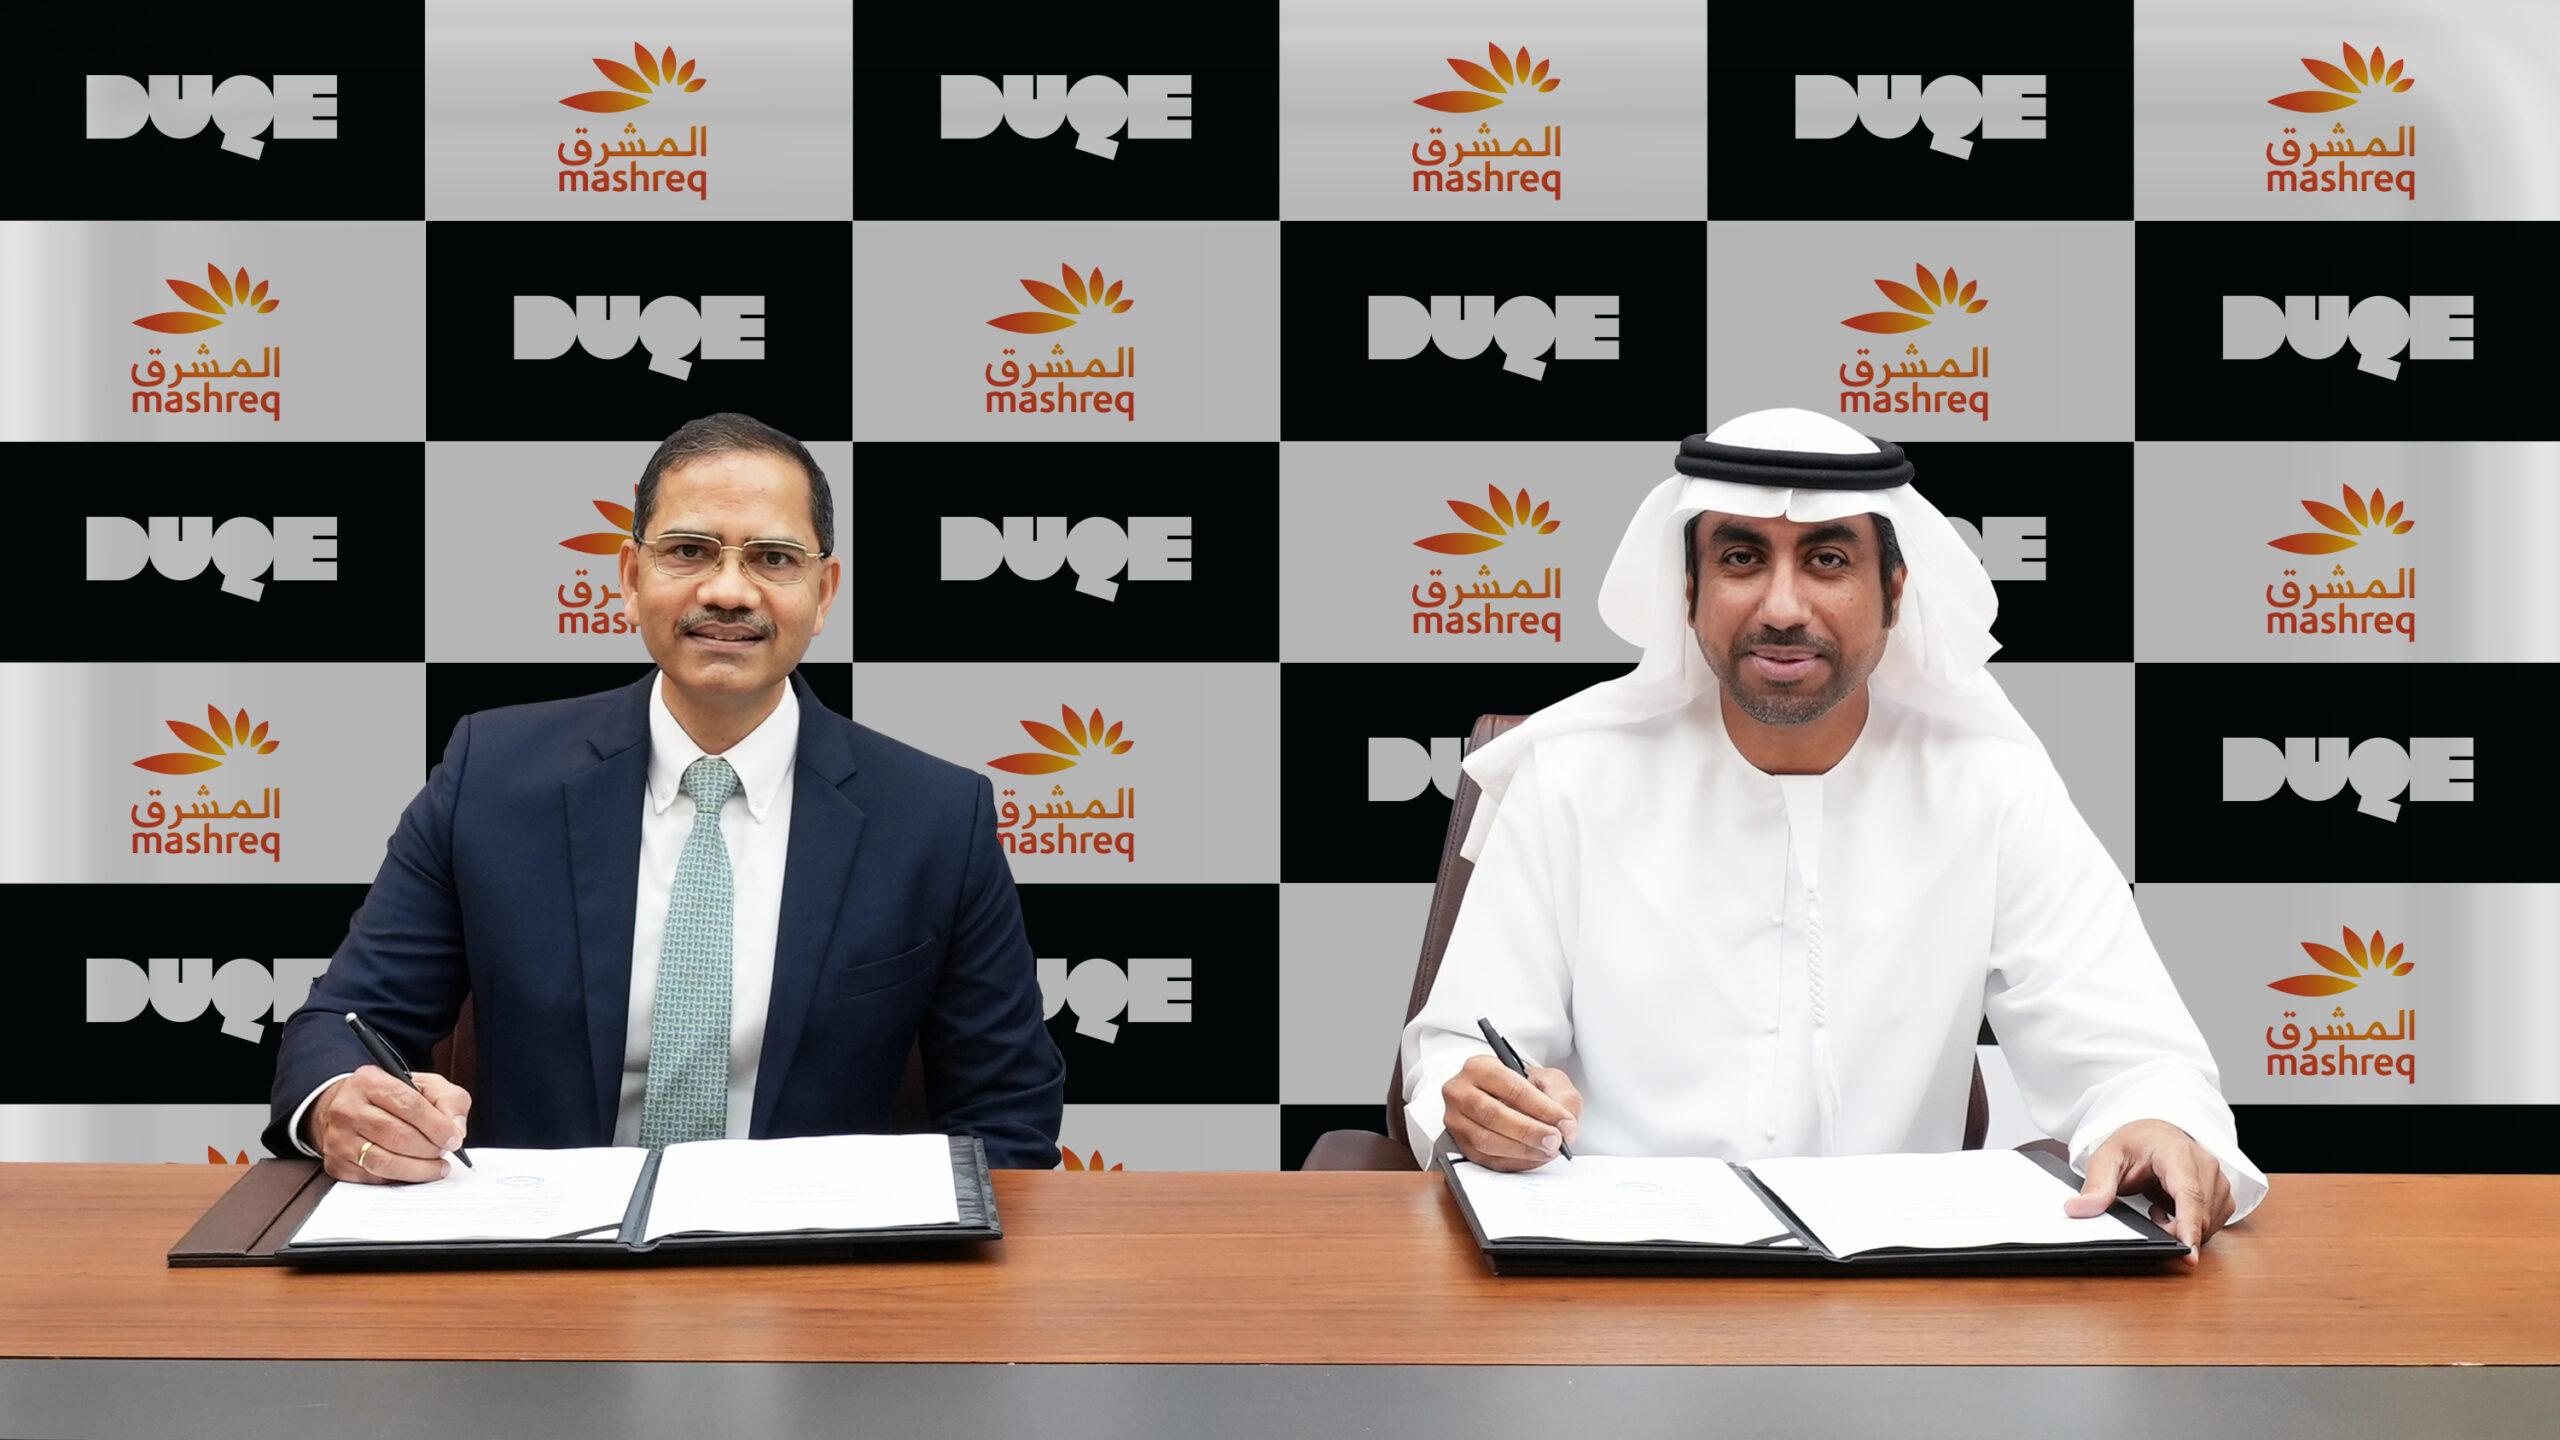 DUQE and Mashreq Bank Partnership